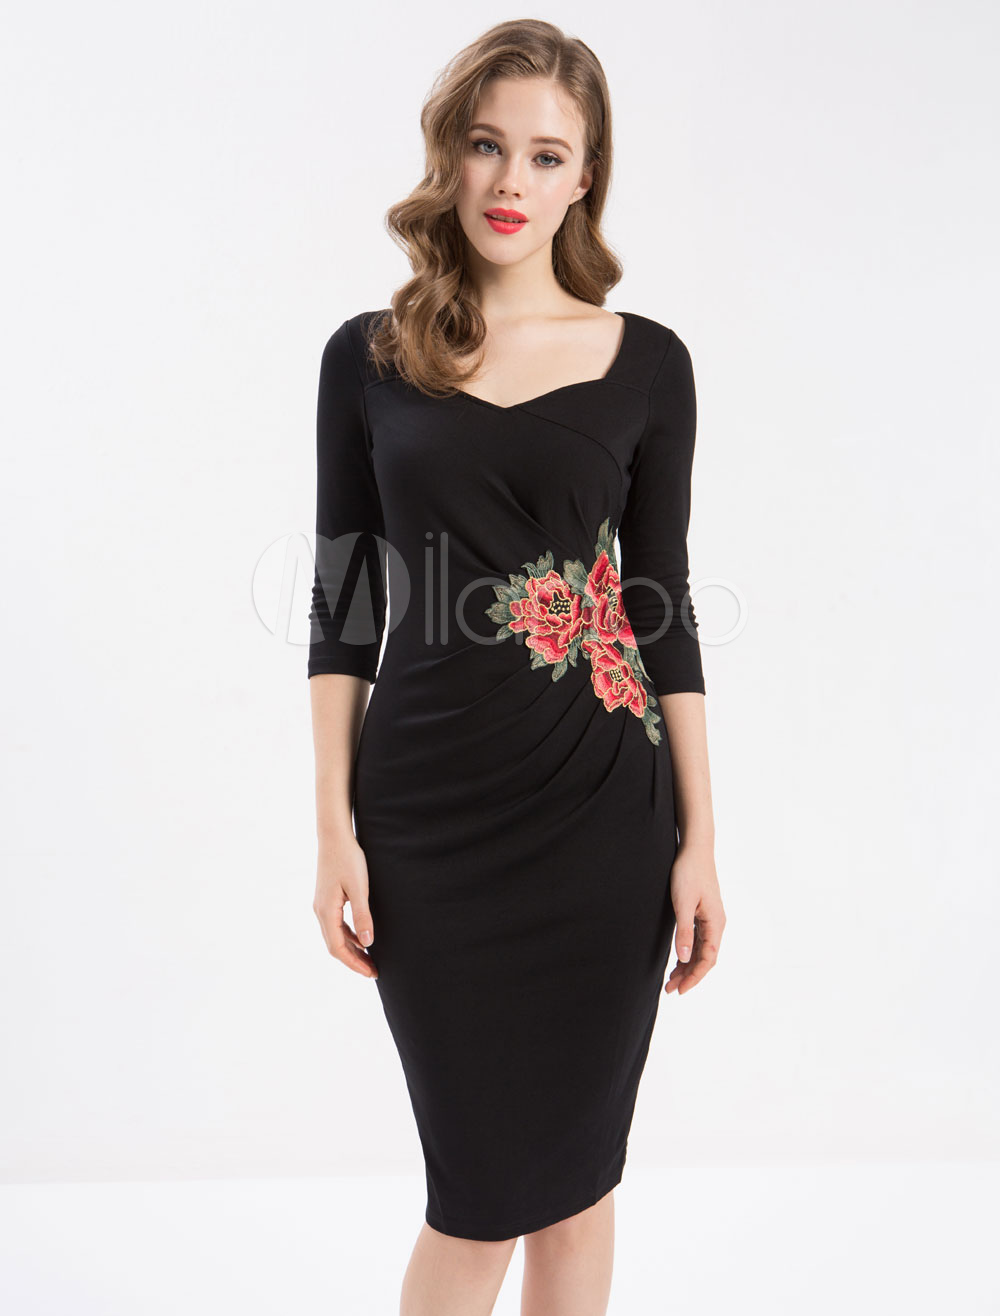 Vintage Black Dress Bodycon Long Sleeve Women's Flower Embroidered Retro Draped Dress (Women\\'s Clothing Vintage Dresses) photo